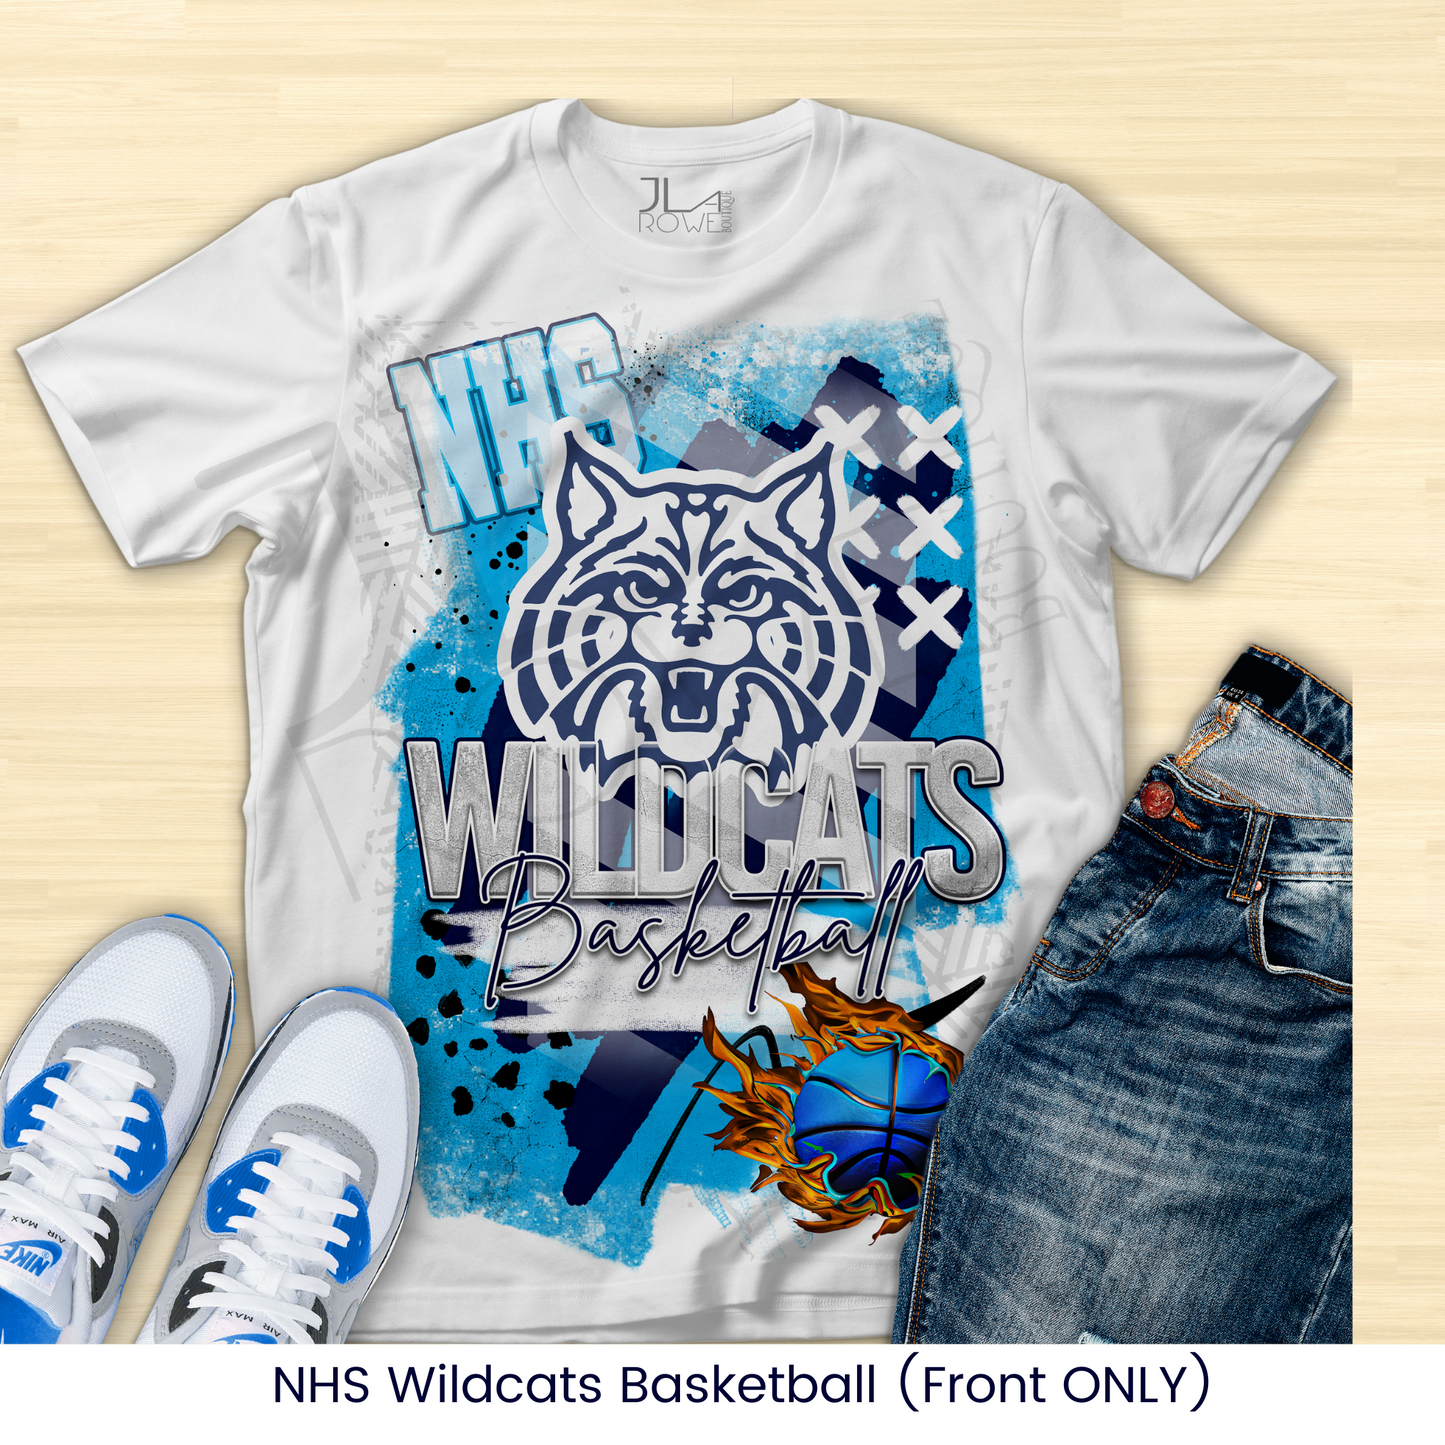 Northwestern: Basketball Wildcats Logo T-shirt